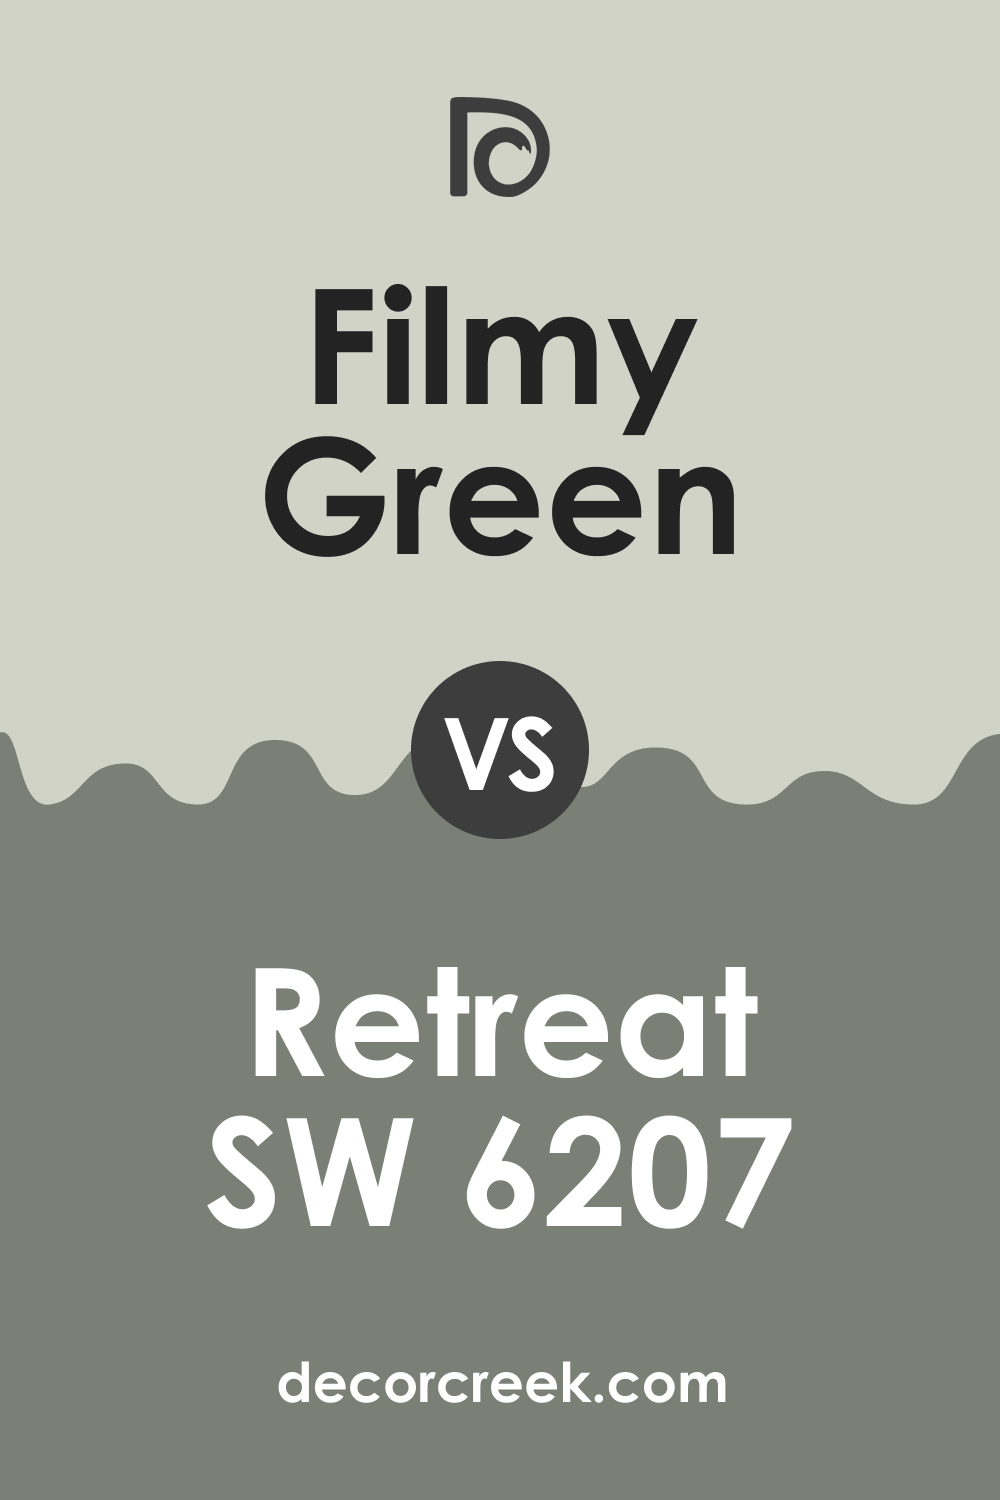 Filmy Green vs Retreat